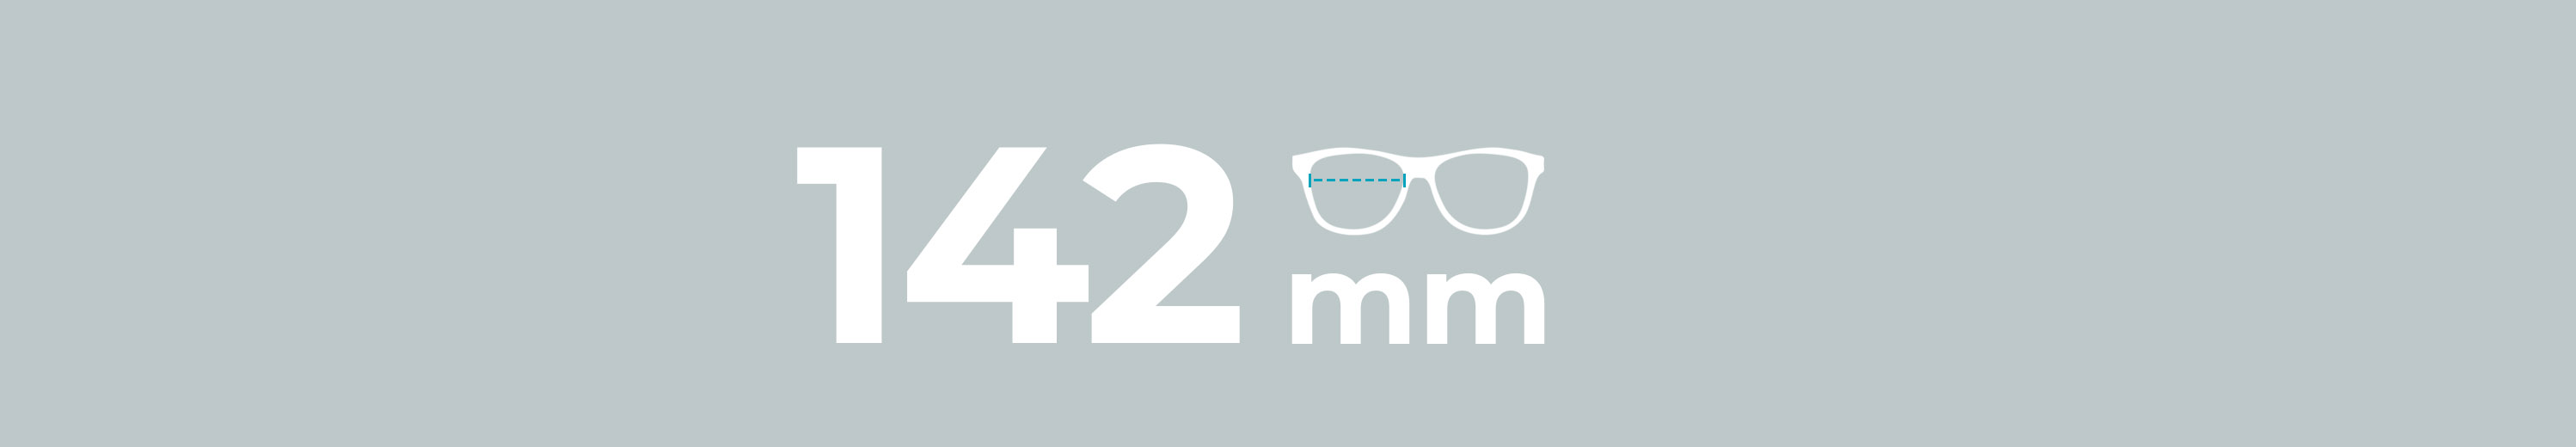 Lens Size: 142mm Glasses